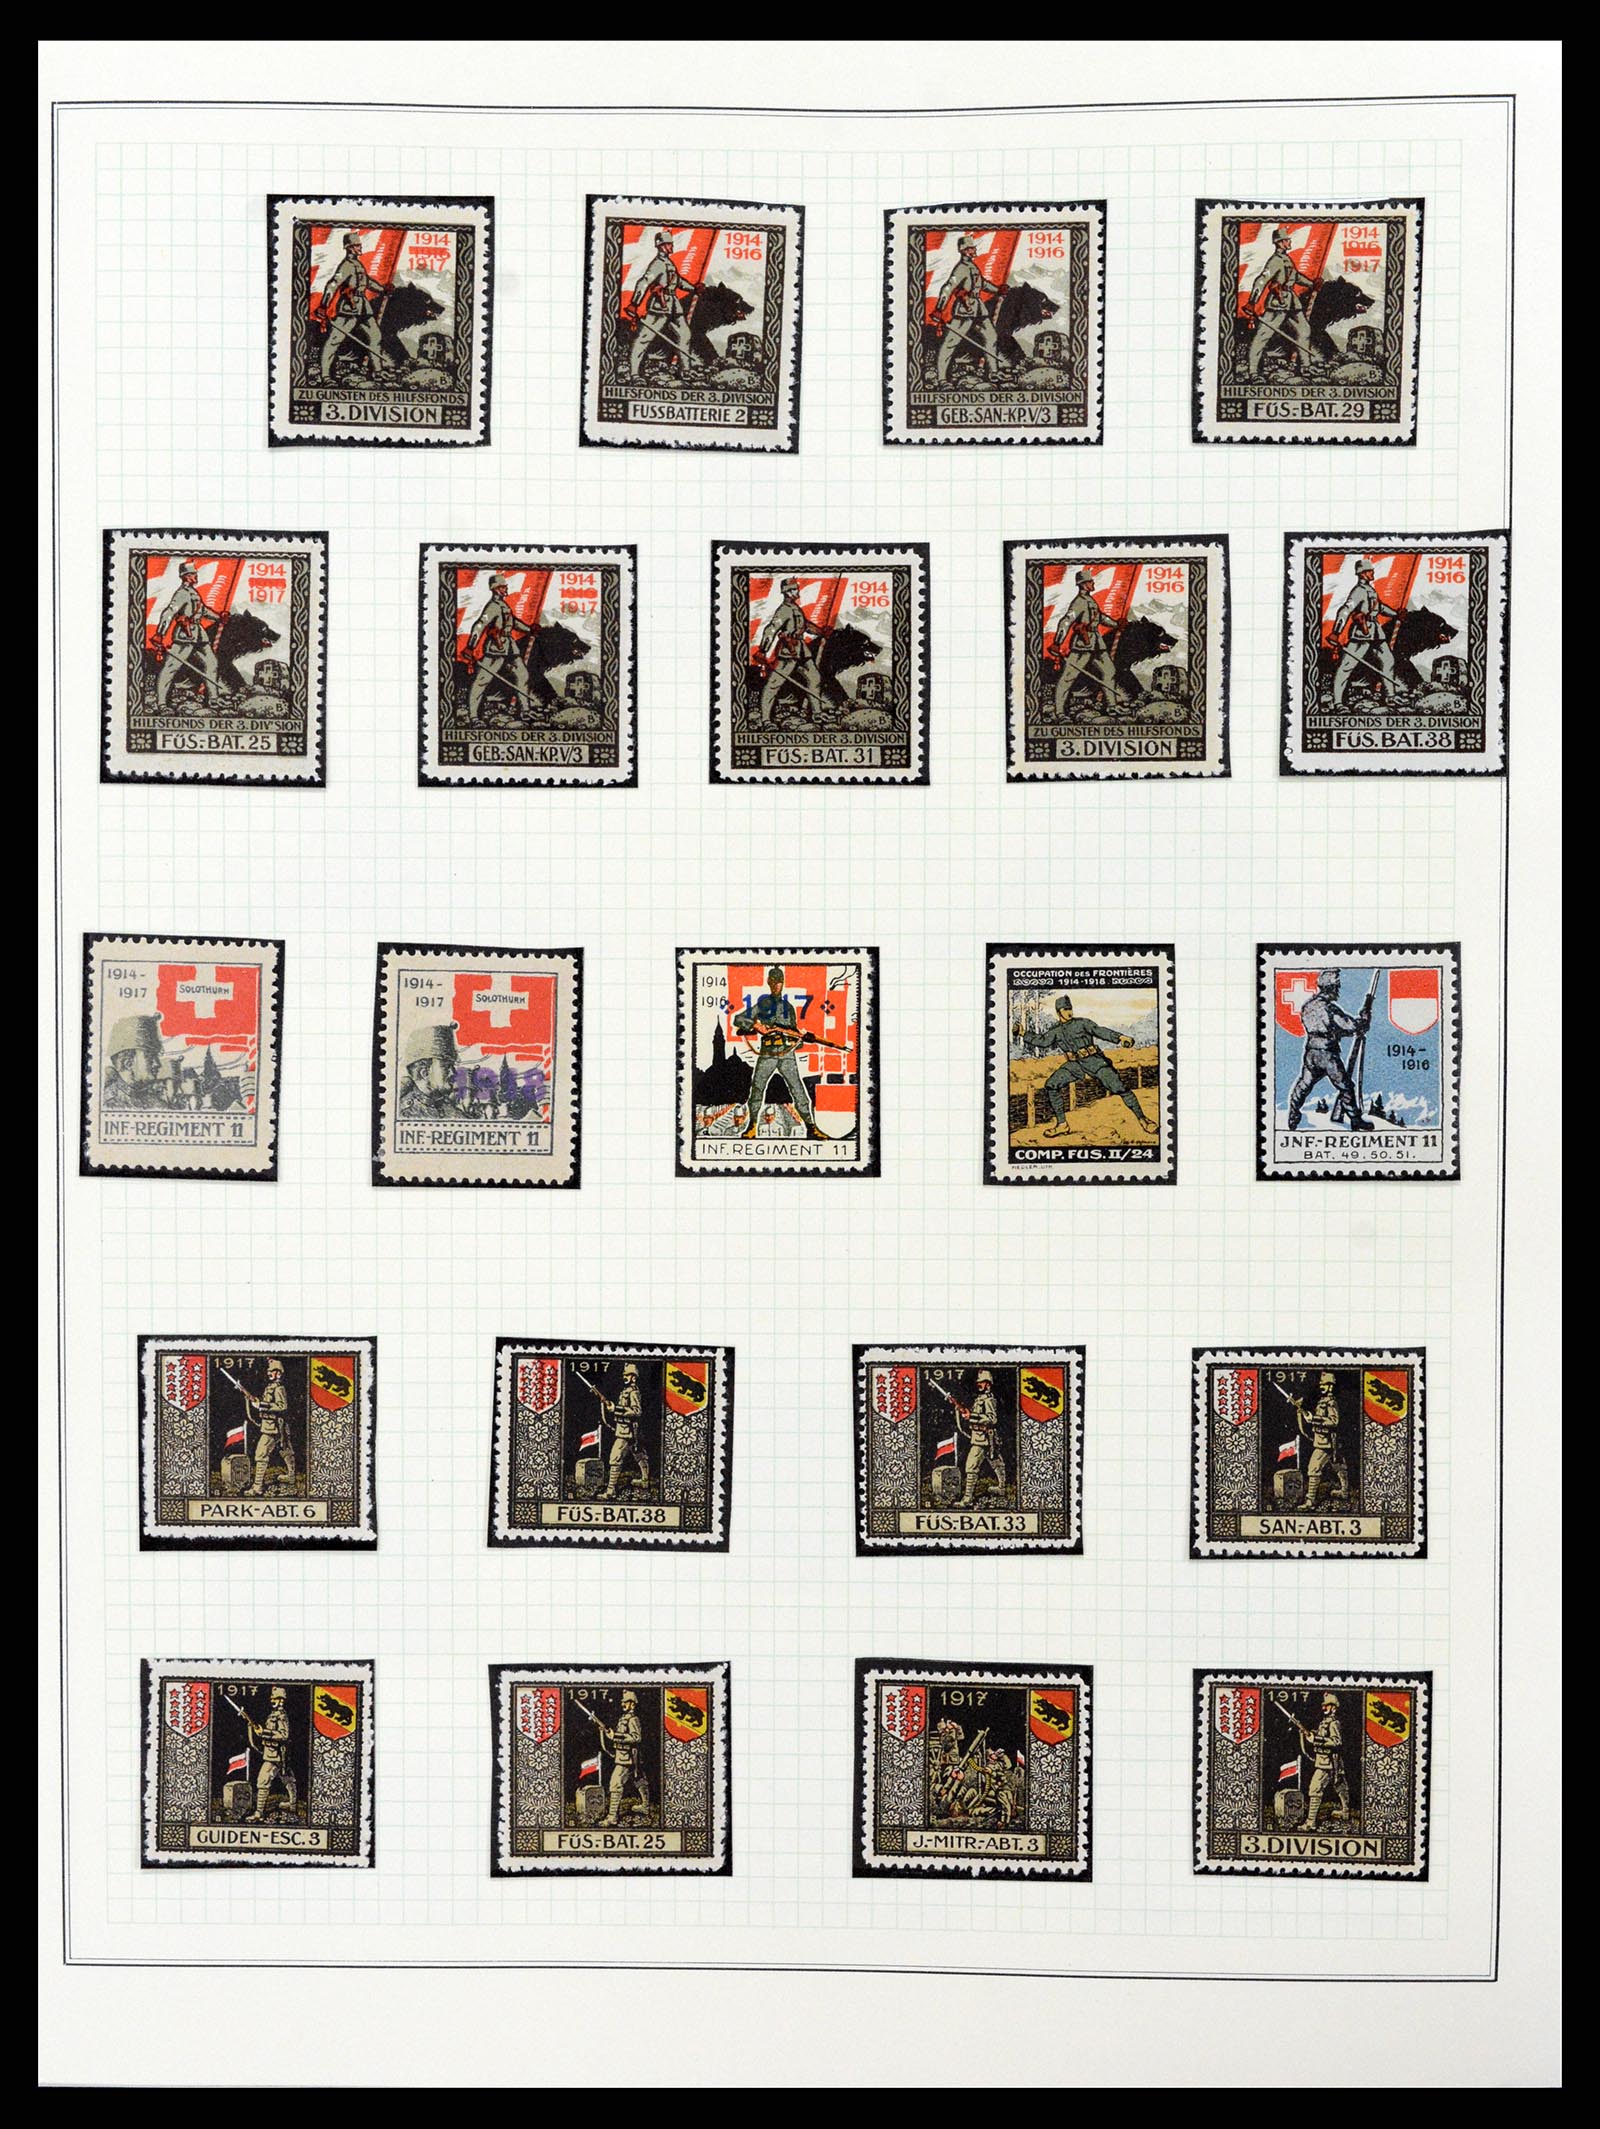 37642 003 - Stamp collection 37642 Switzerland soldier stamps 1914-1945.